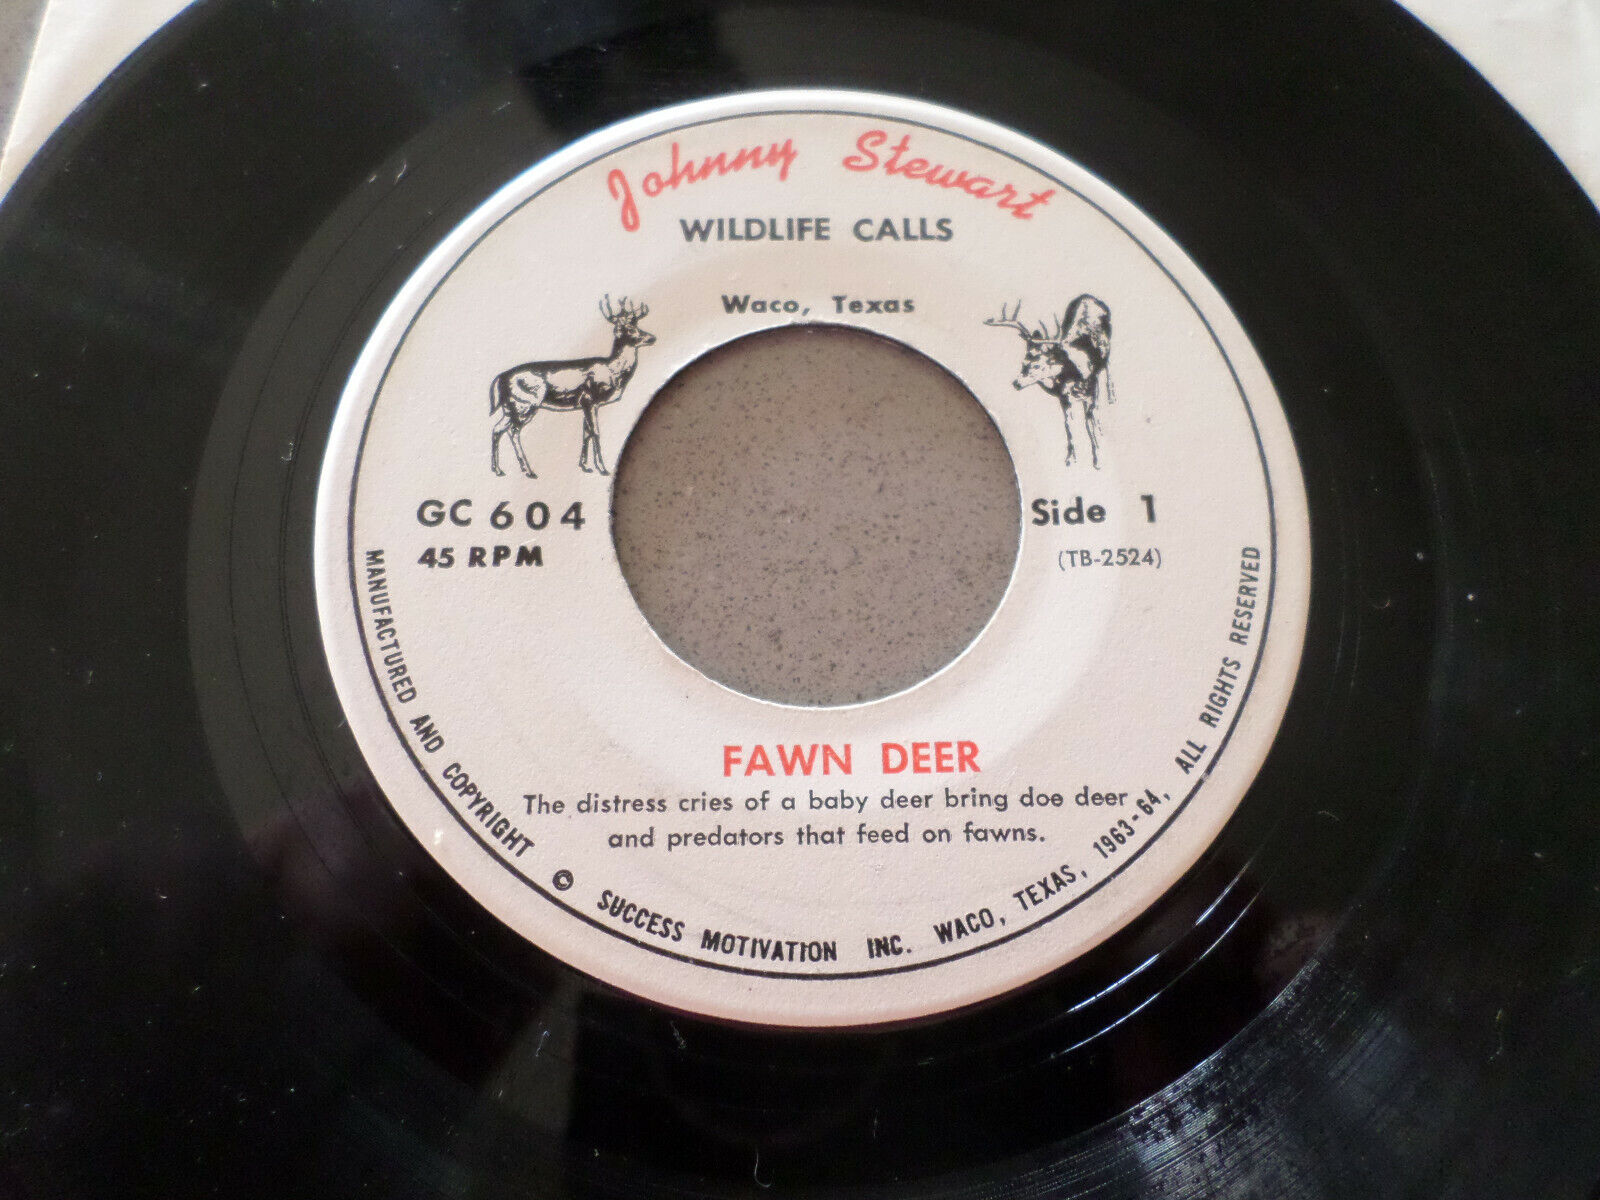 Johnny Stewart WildLife Calls  Fawn Deer 45 rpm baby deer distress GC 604